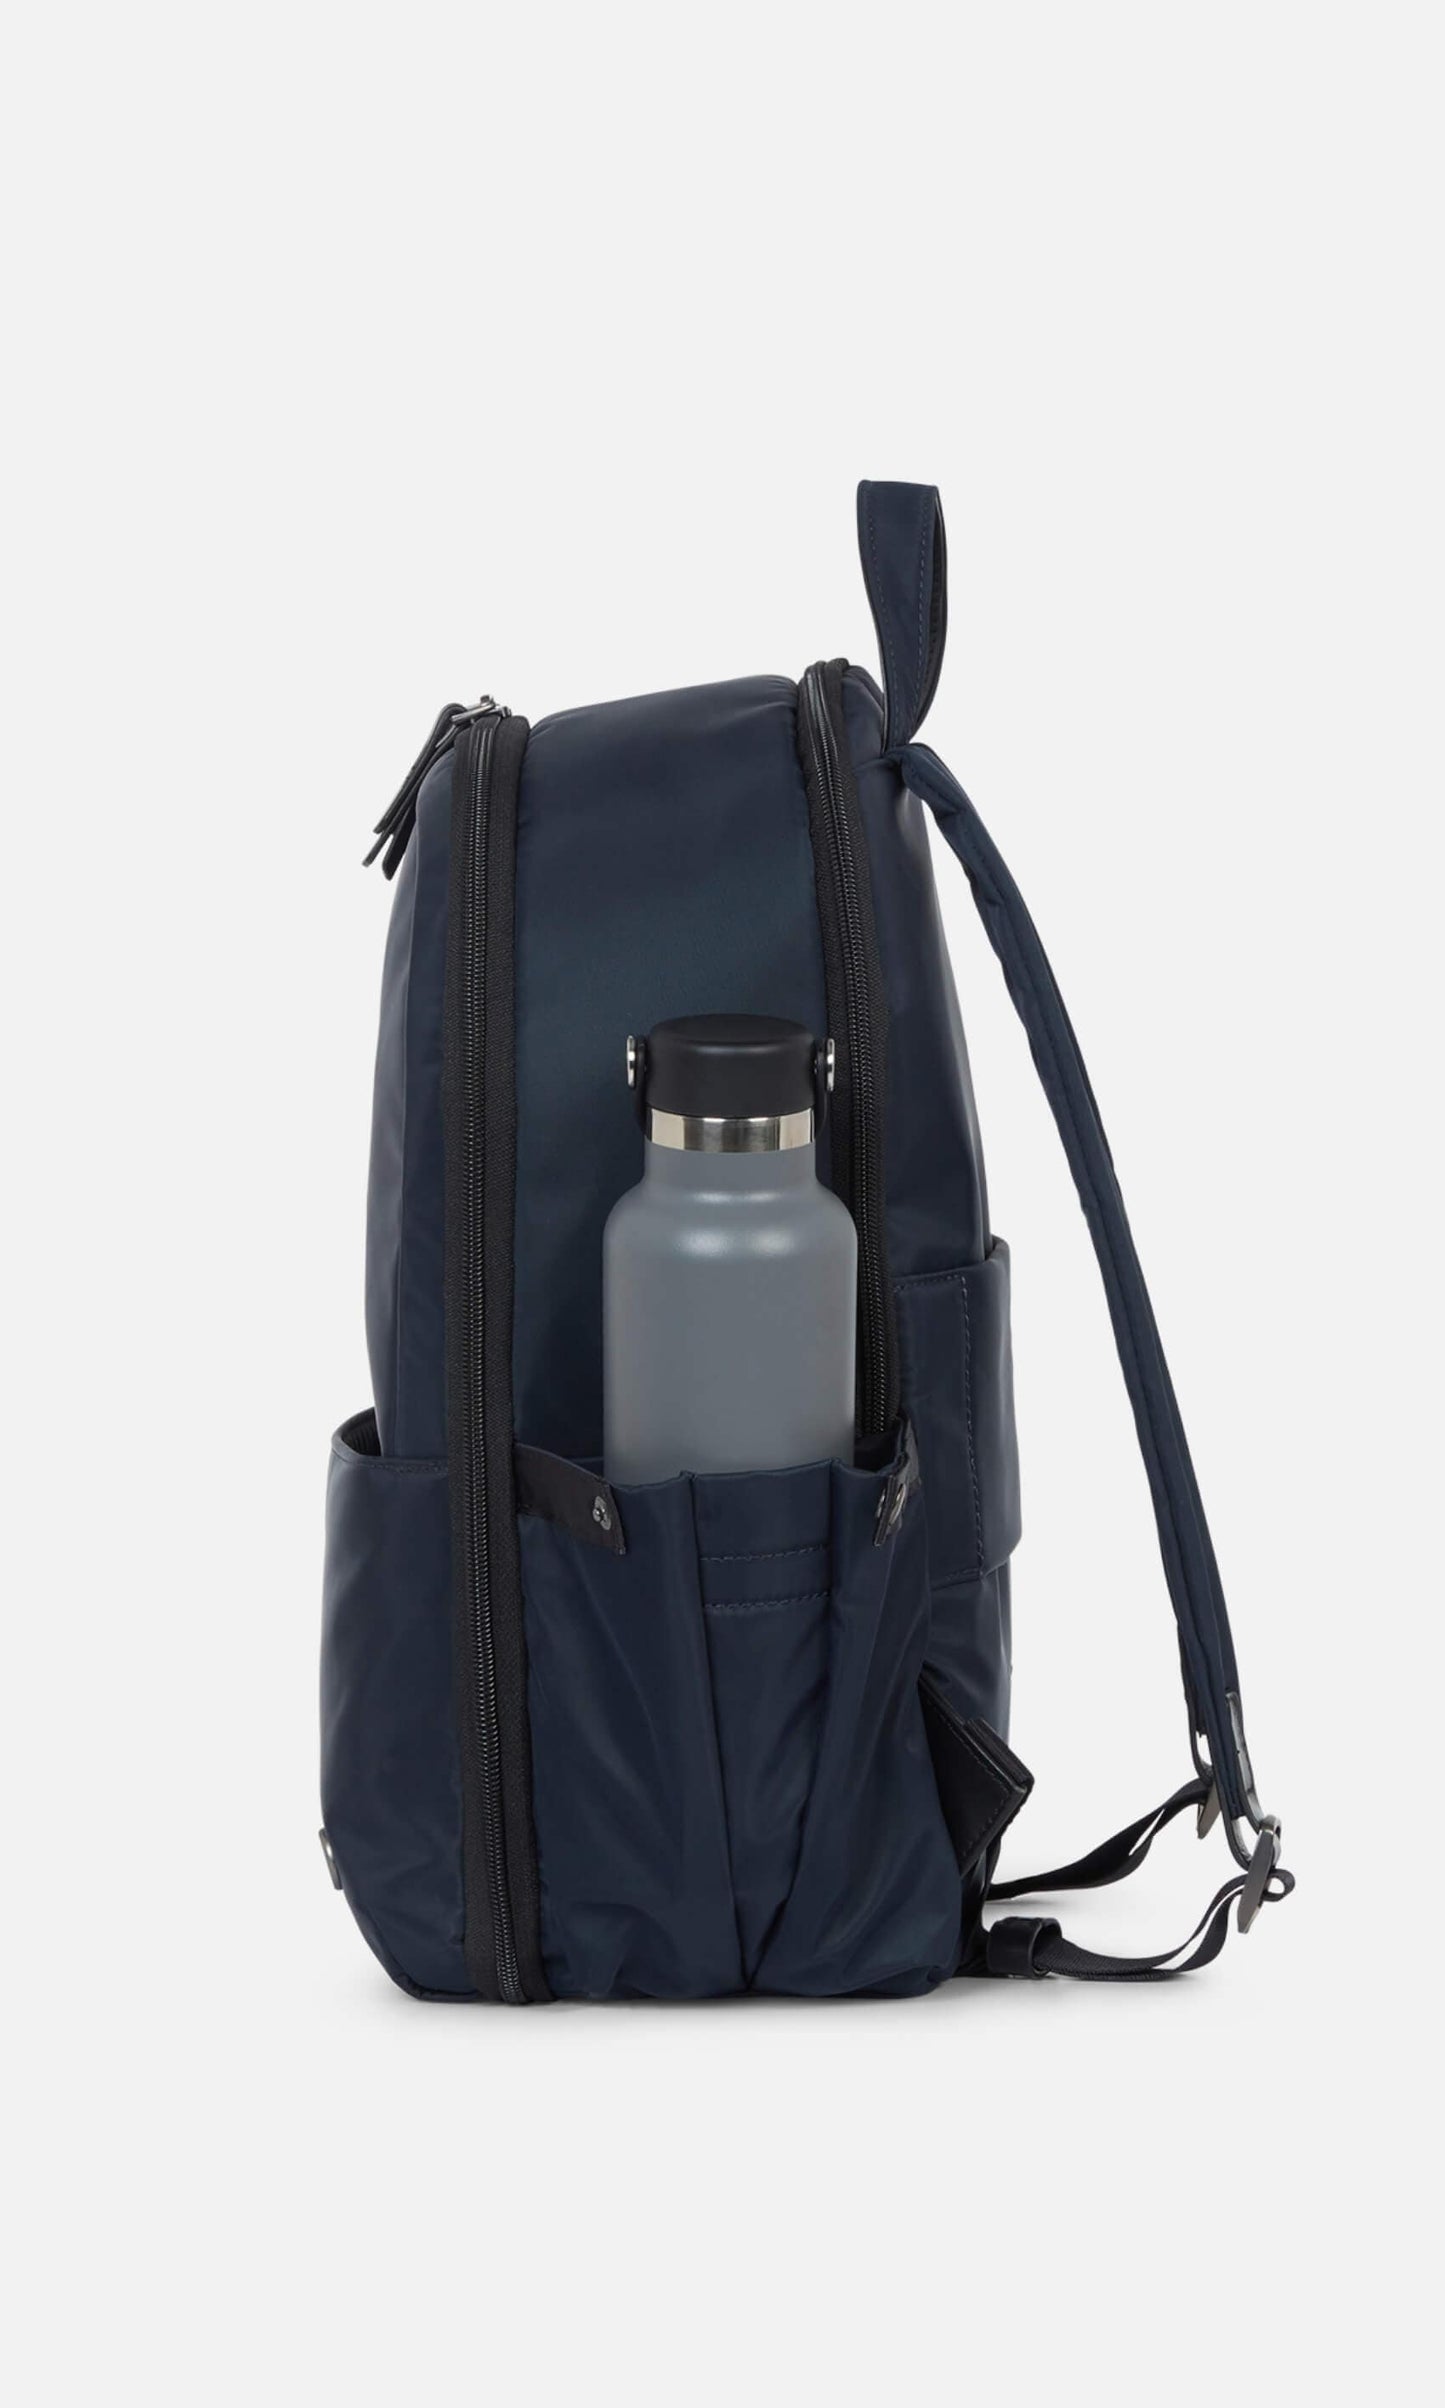 Antler Luggage -  Chelsea large backpack in navy - Backpacks Chelsea Backpack Navy | Travel & Lifestyle Bags | Antler UK